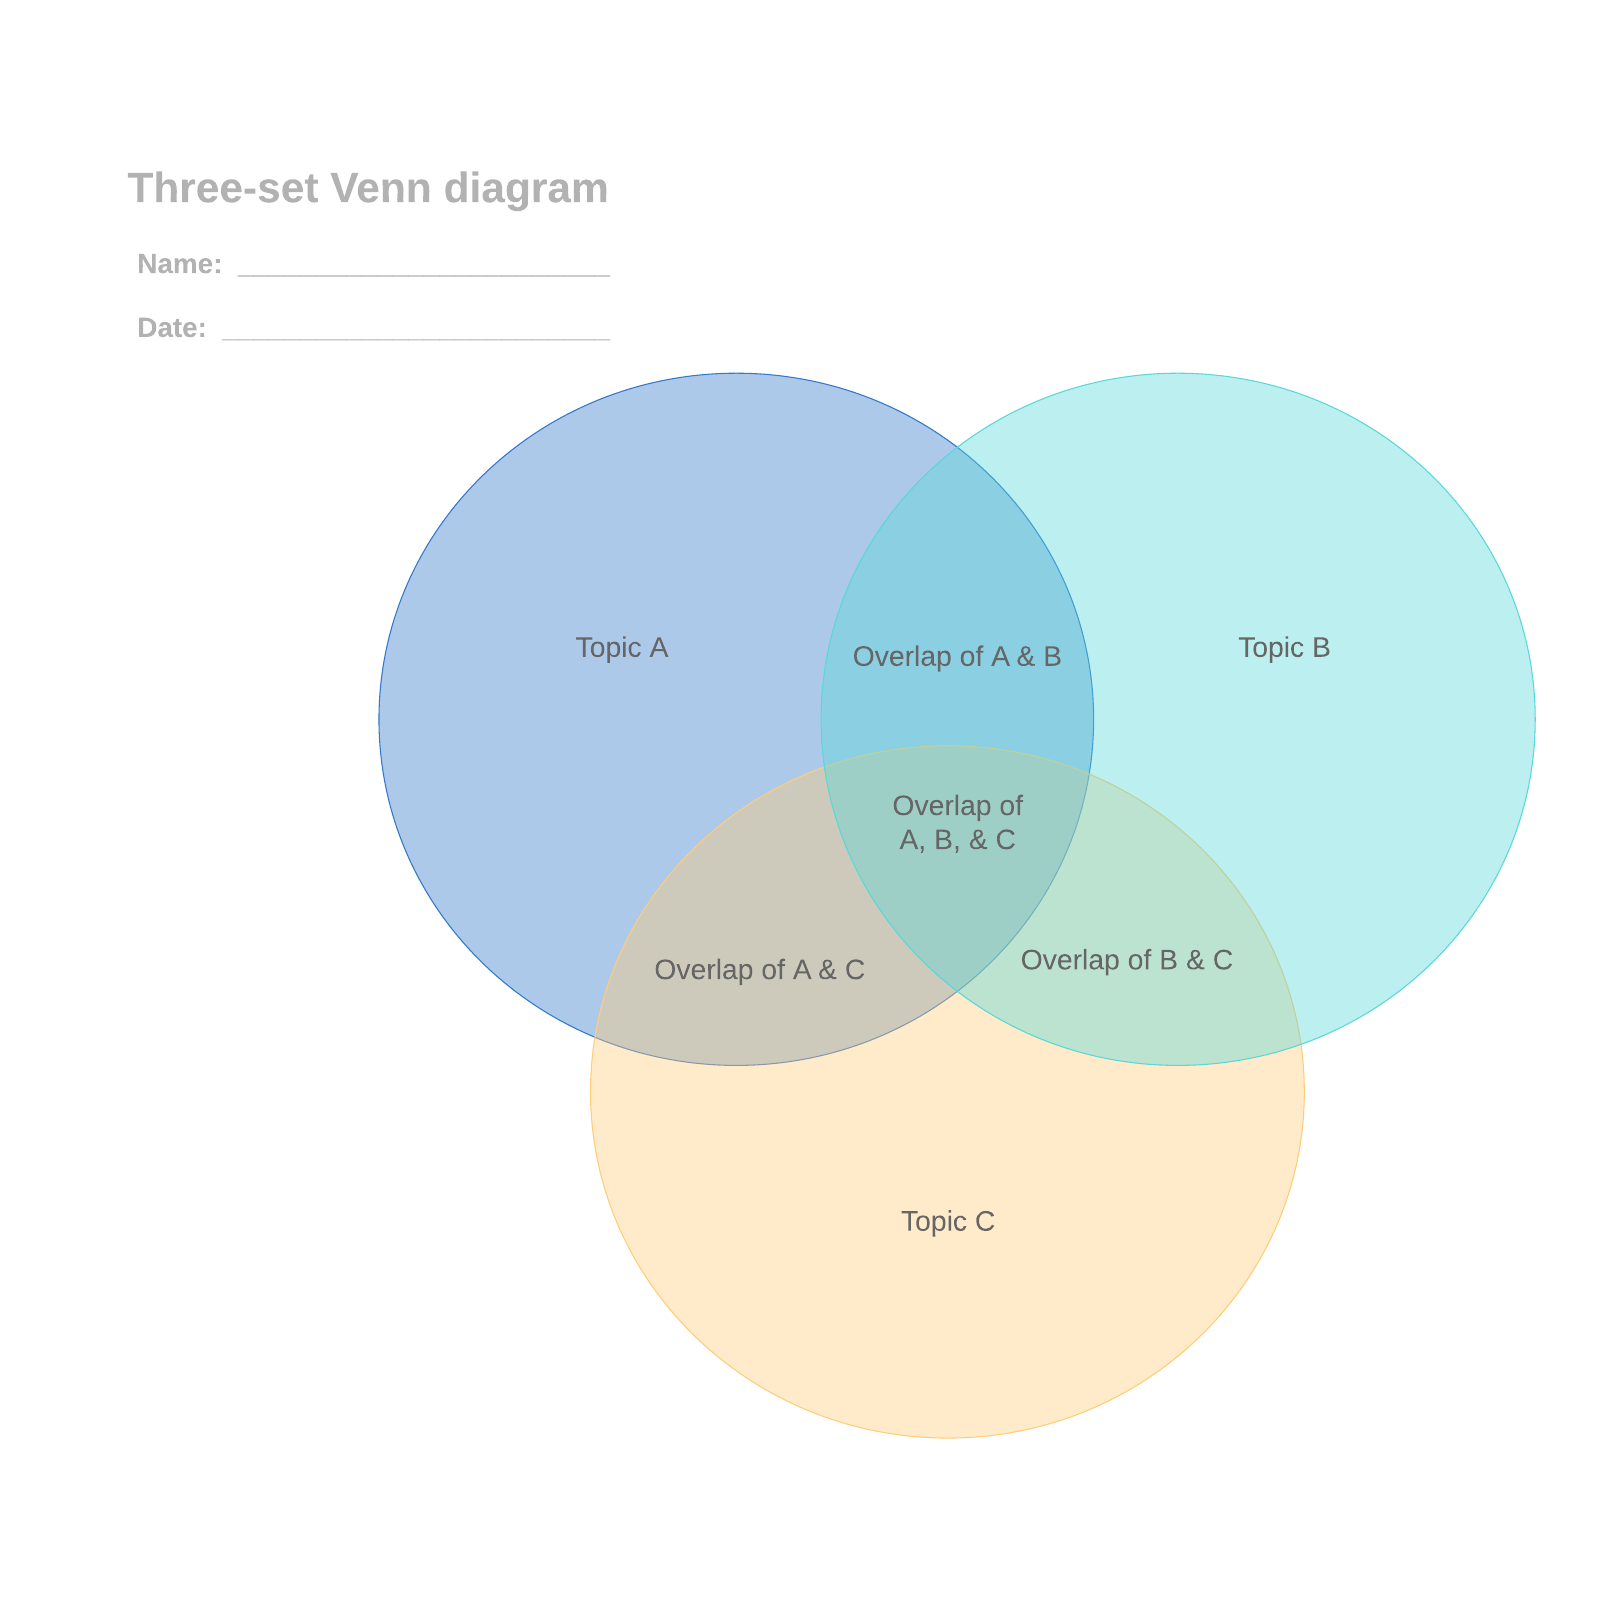 Three-set Venn diagram example